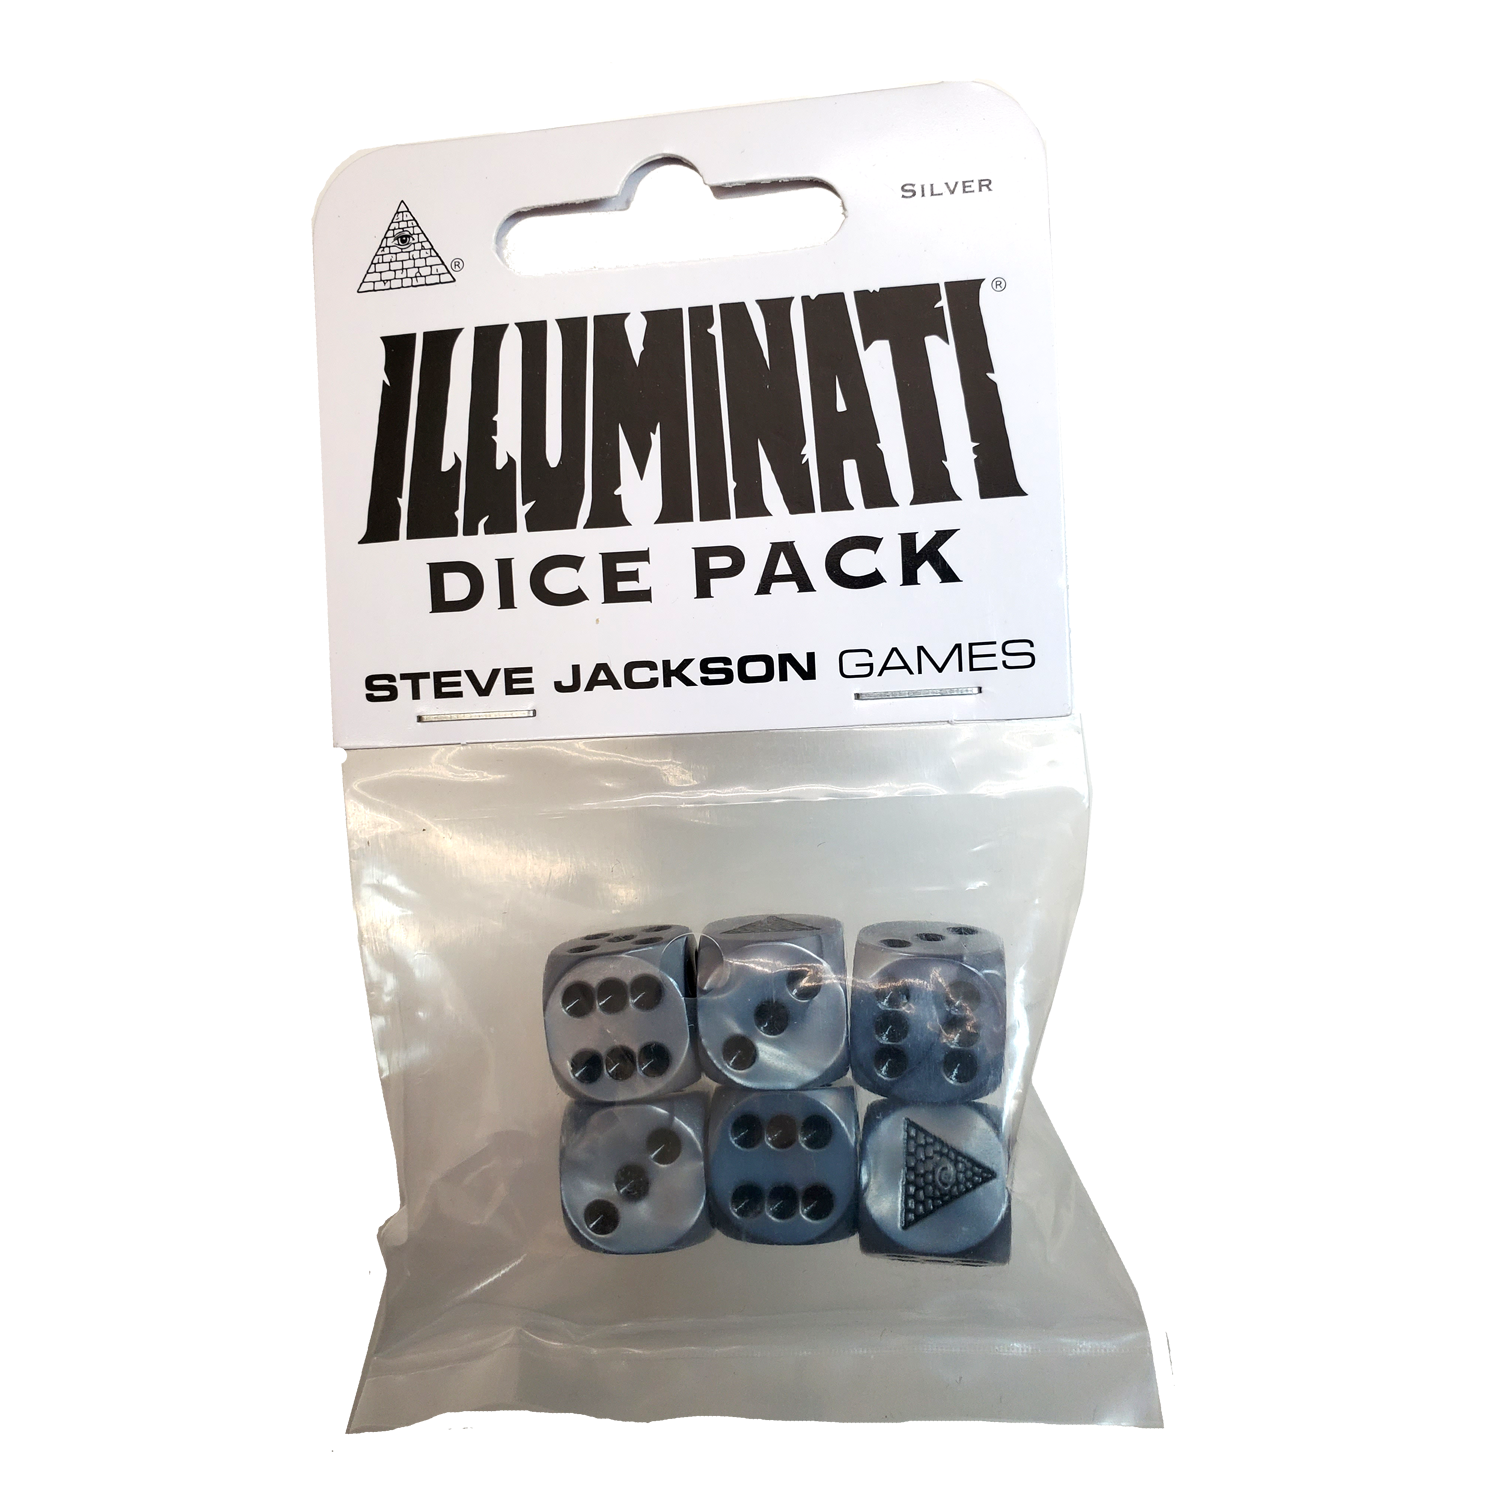 Buy silver Illuminati Dice Pack